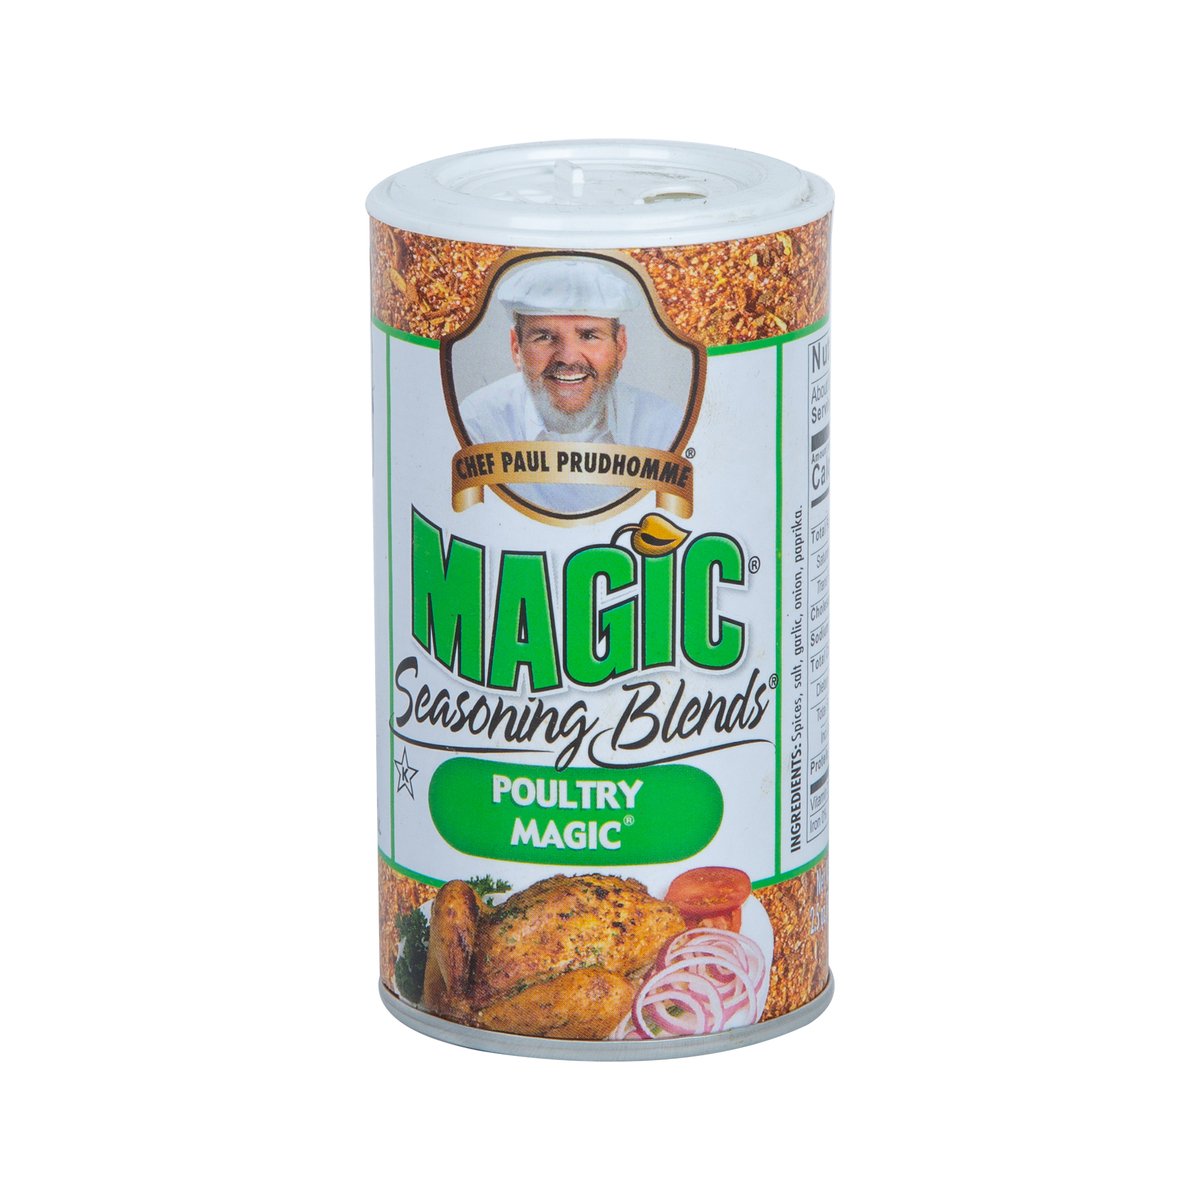 Magic Seasoning Blends Poultry Magic 2.5 oz